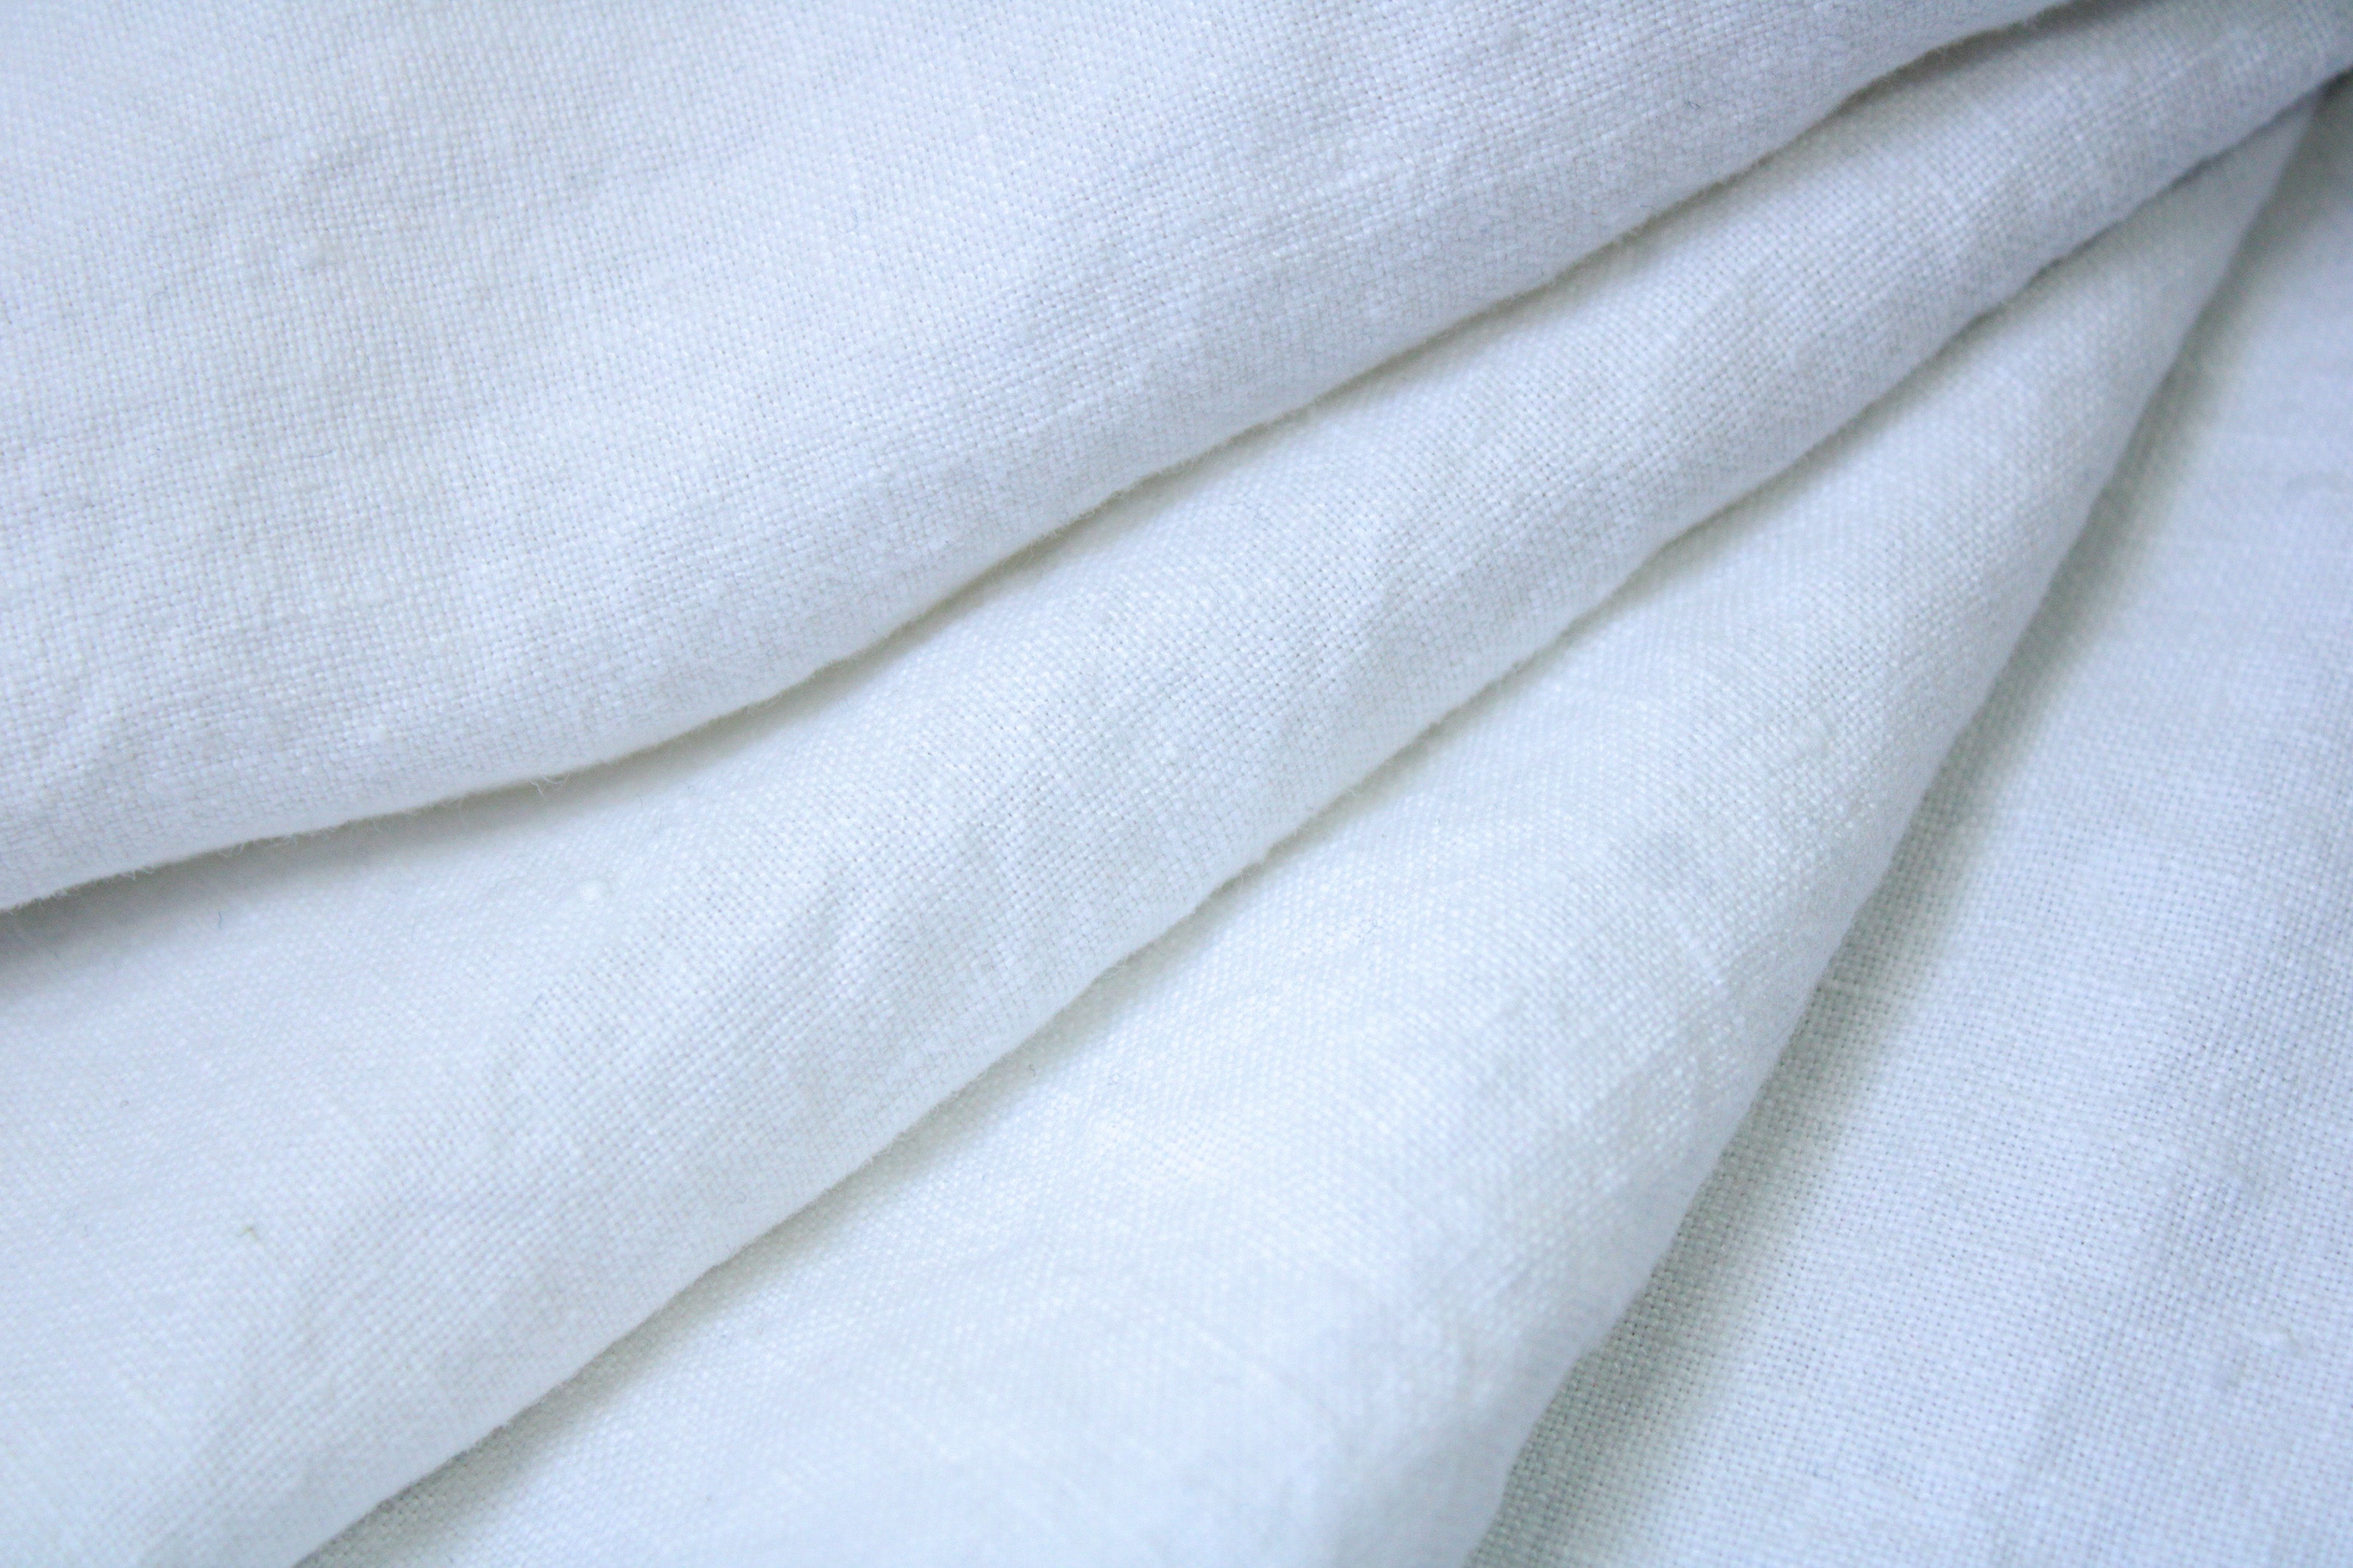 Washed Heavyweight Linen Fabric / White Linen Fabric